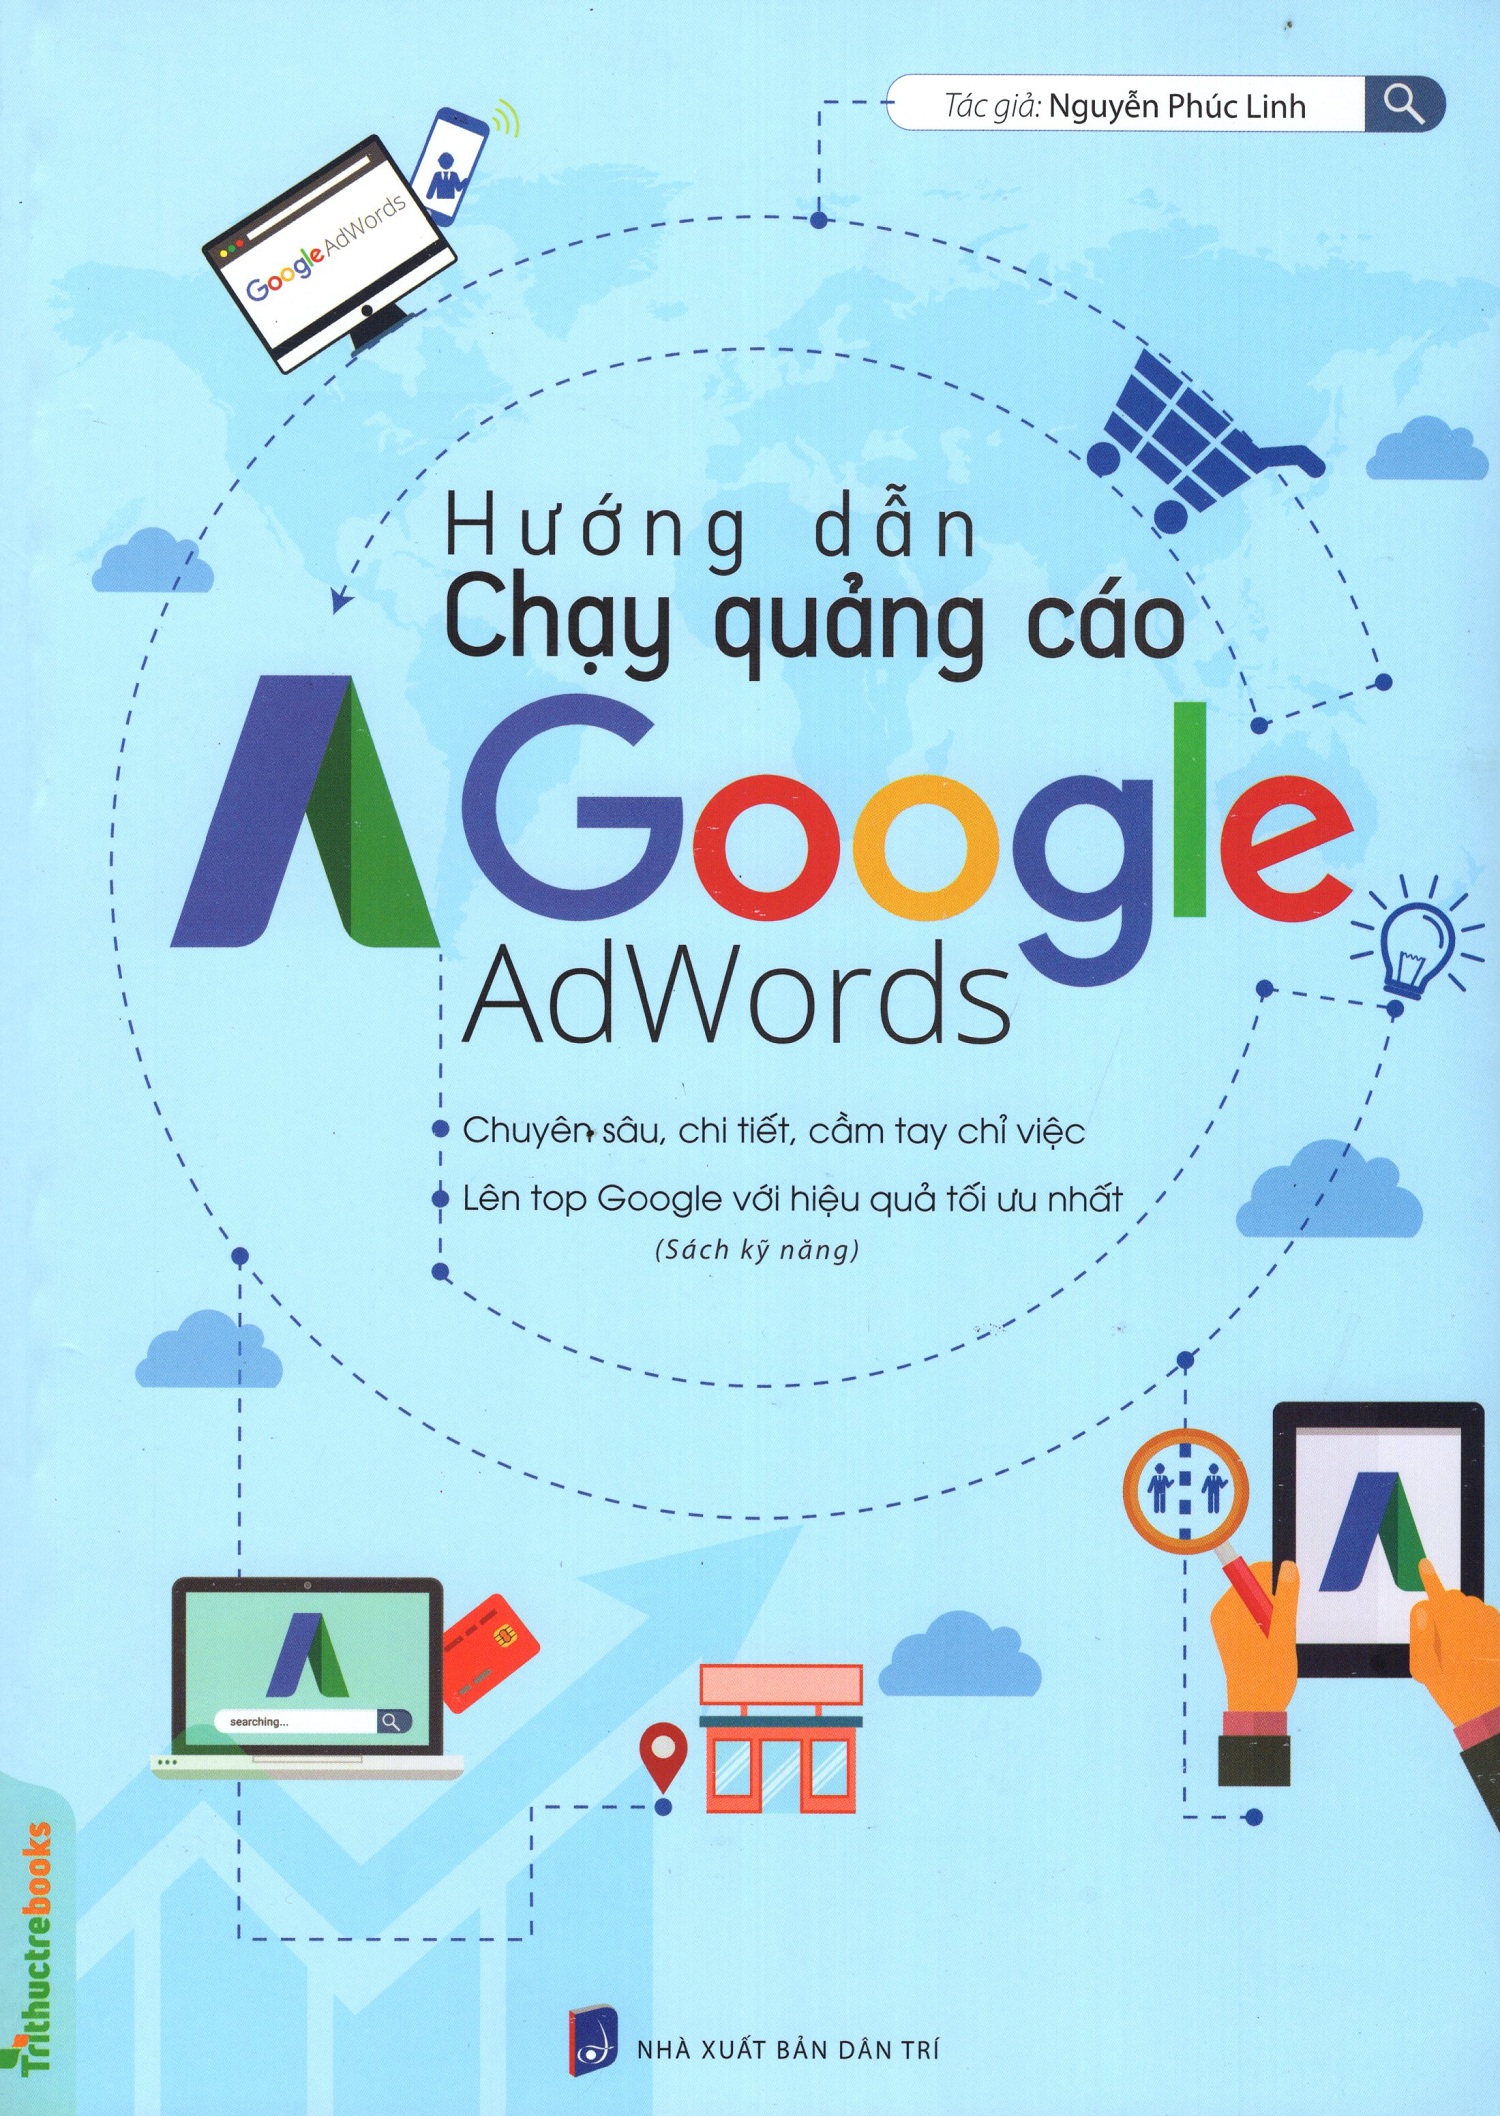 huong dan chay quang cao google adwords ads co ban